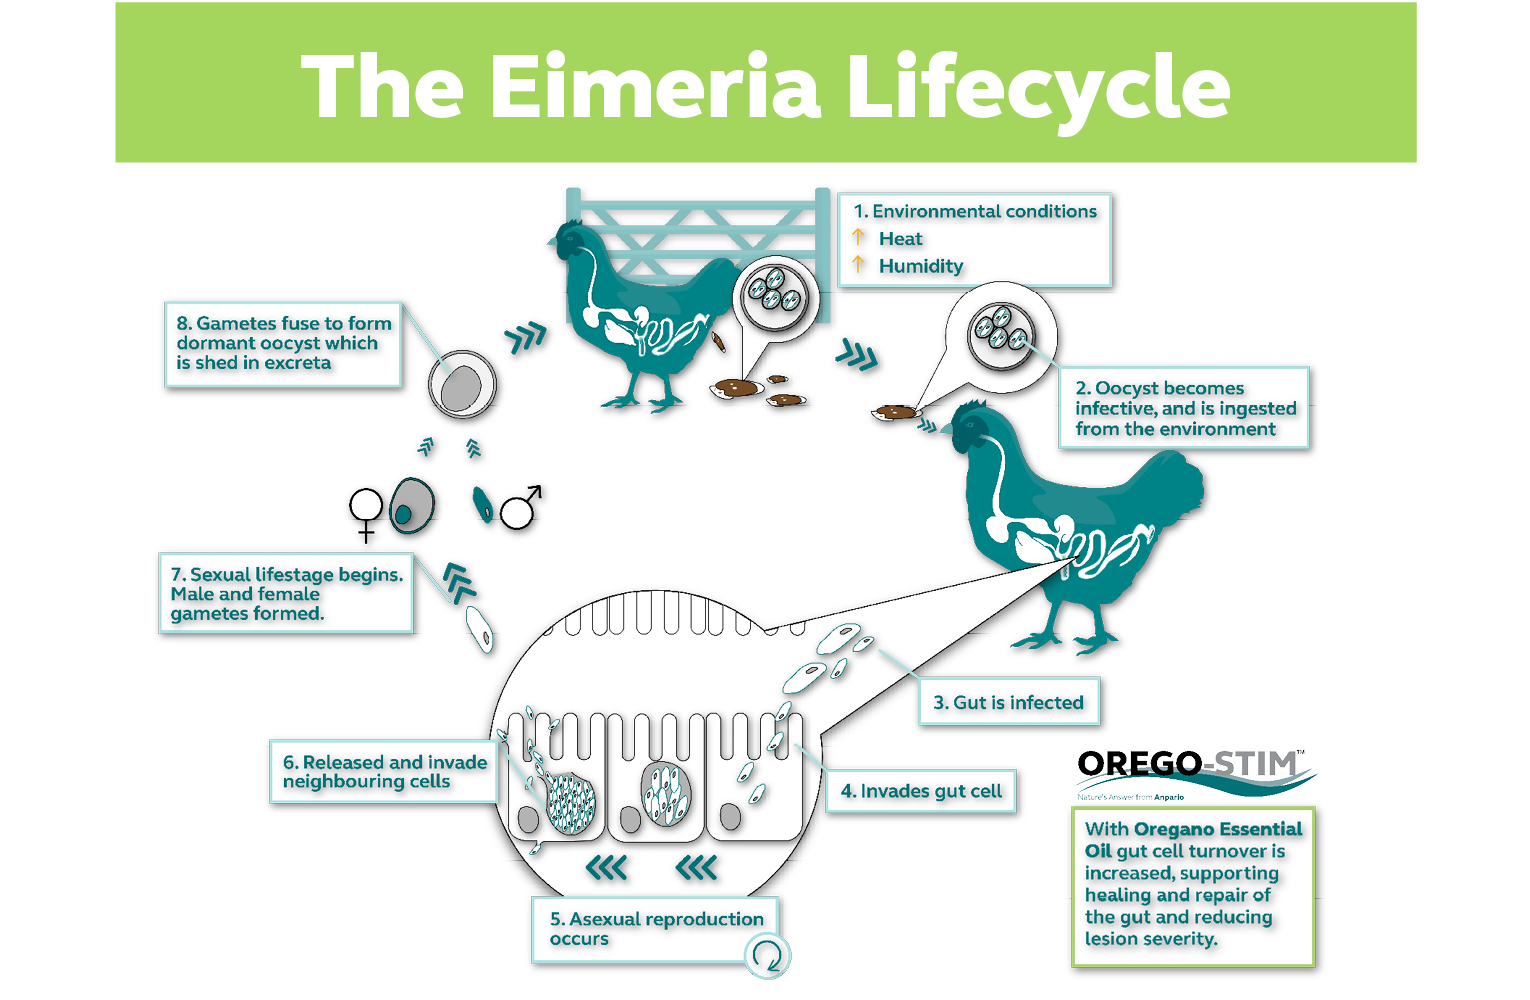 Orego-Stim helps disrupt the Eimeria lifecycle